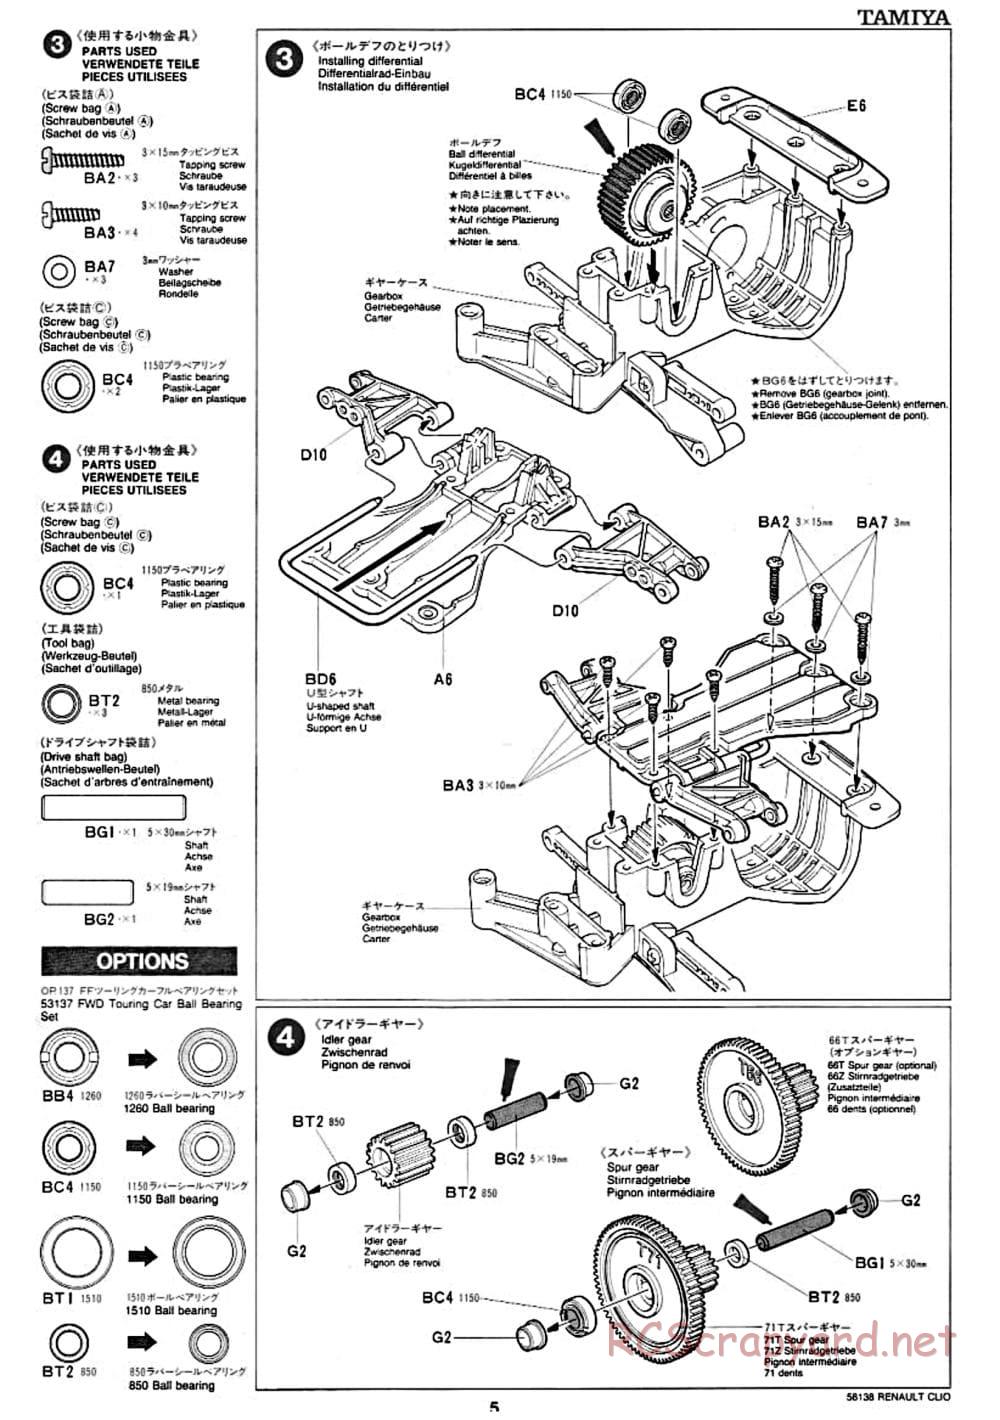 Tamiya - Renault Clio Williams Chassis - Manual - Page 5